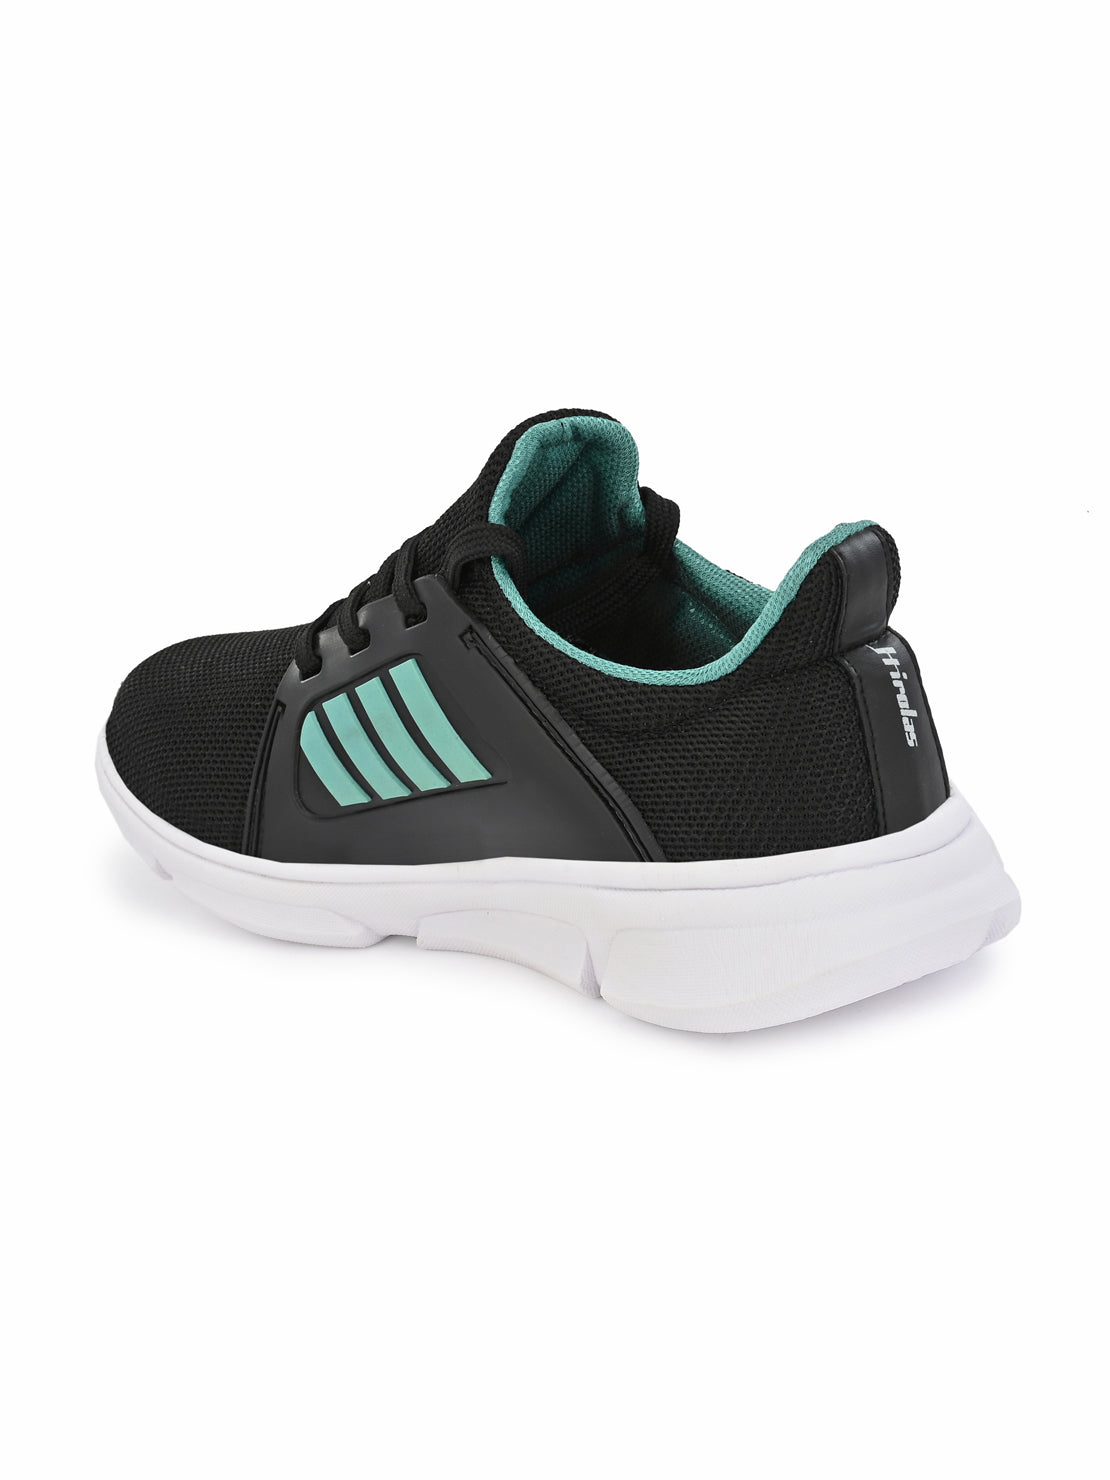 Hirolas® Men's Black/Blue Mesh Running/Walking/Gym Lace Up Sneaker Sport Shoes (HRL2003BLS)